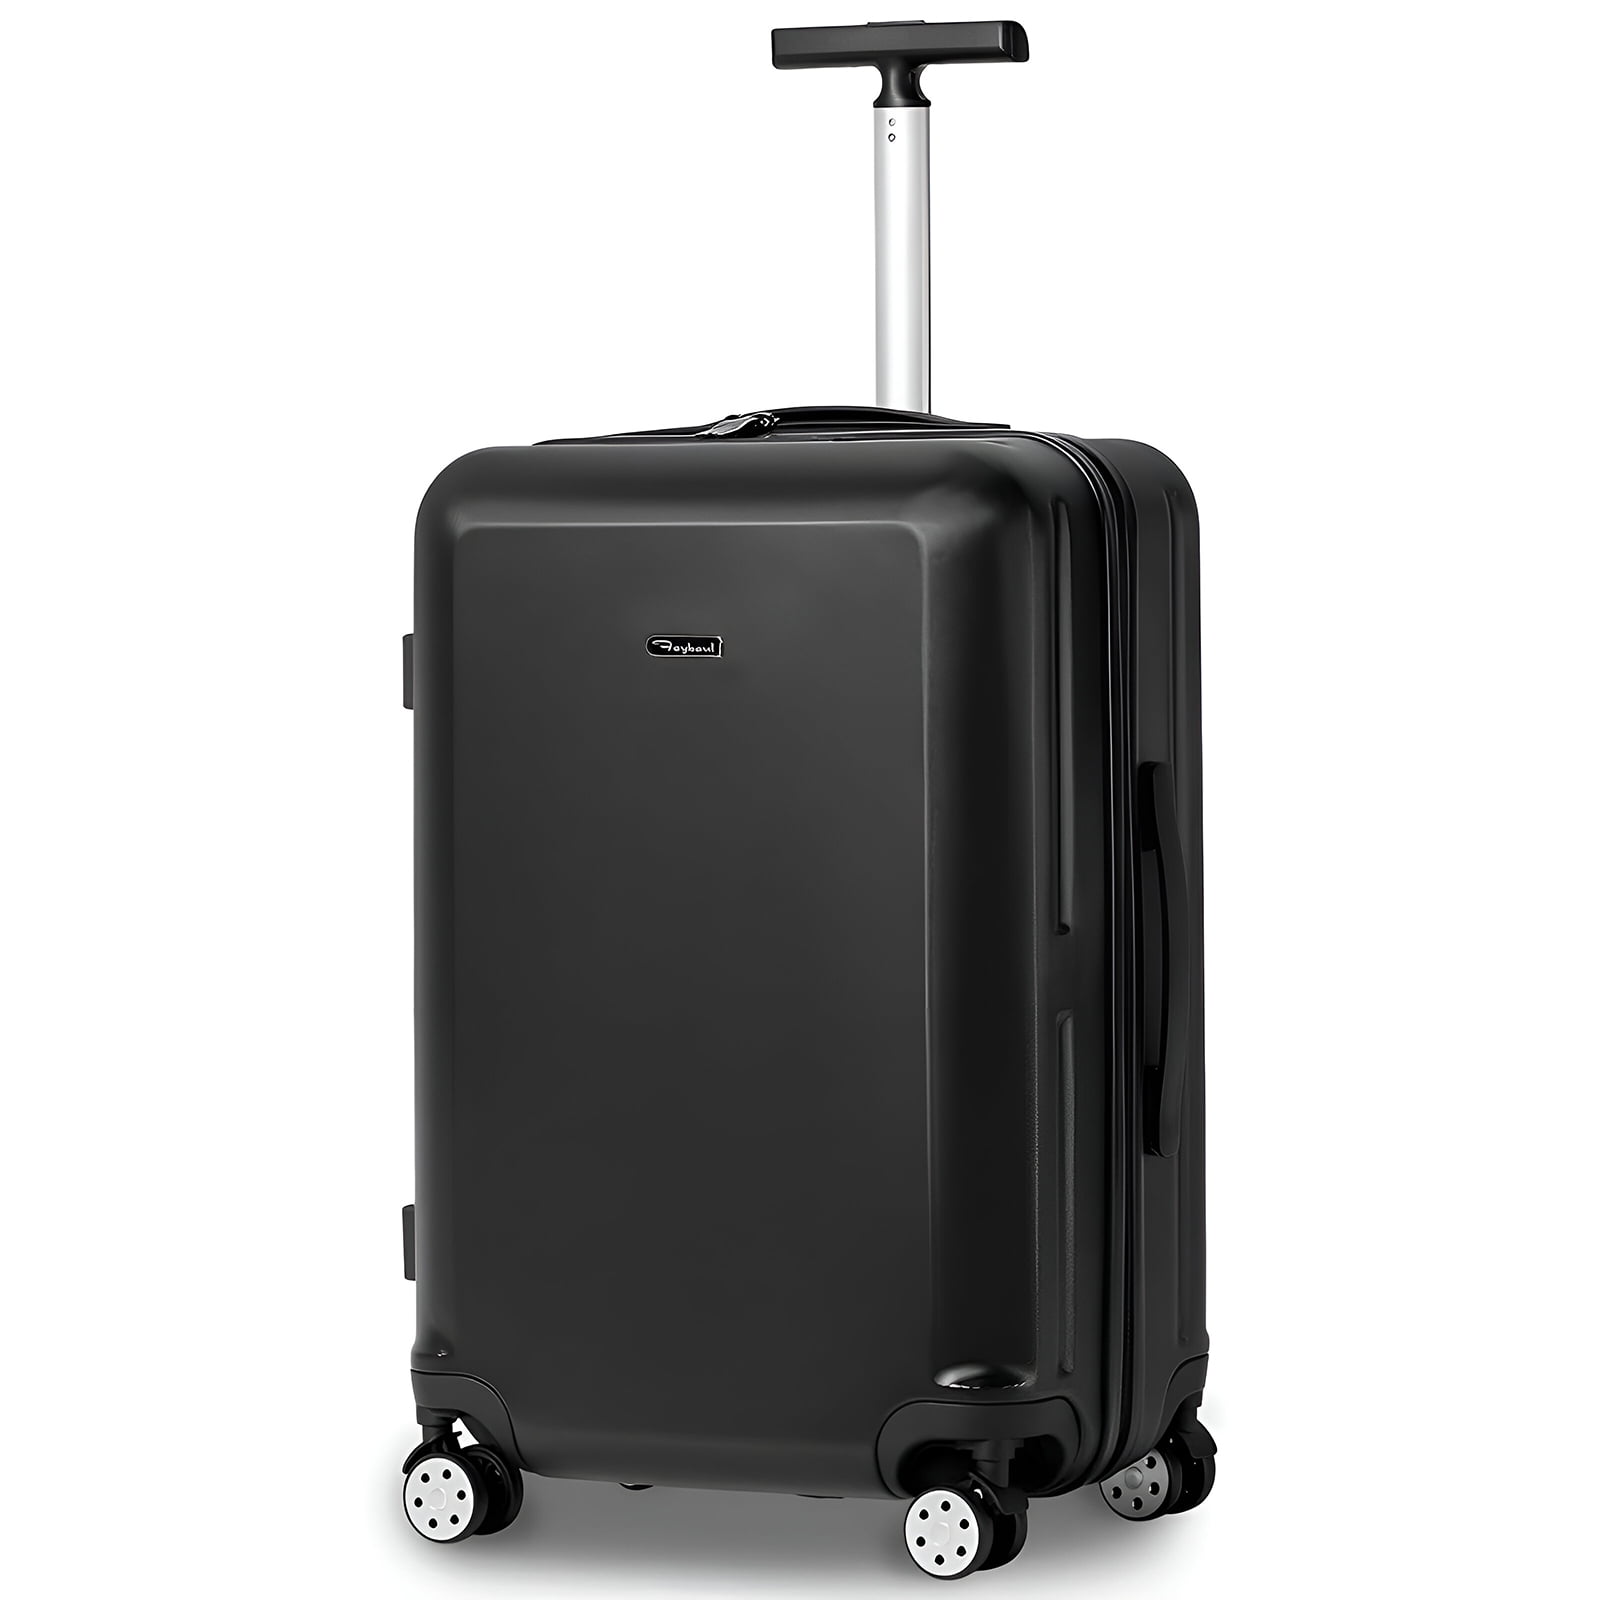 Yinpecly Luggage Handle Suitcase Handle Replacement Suitcase Handles Plastic, Black 4pcs